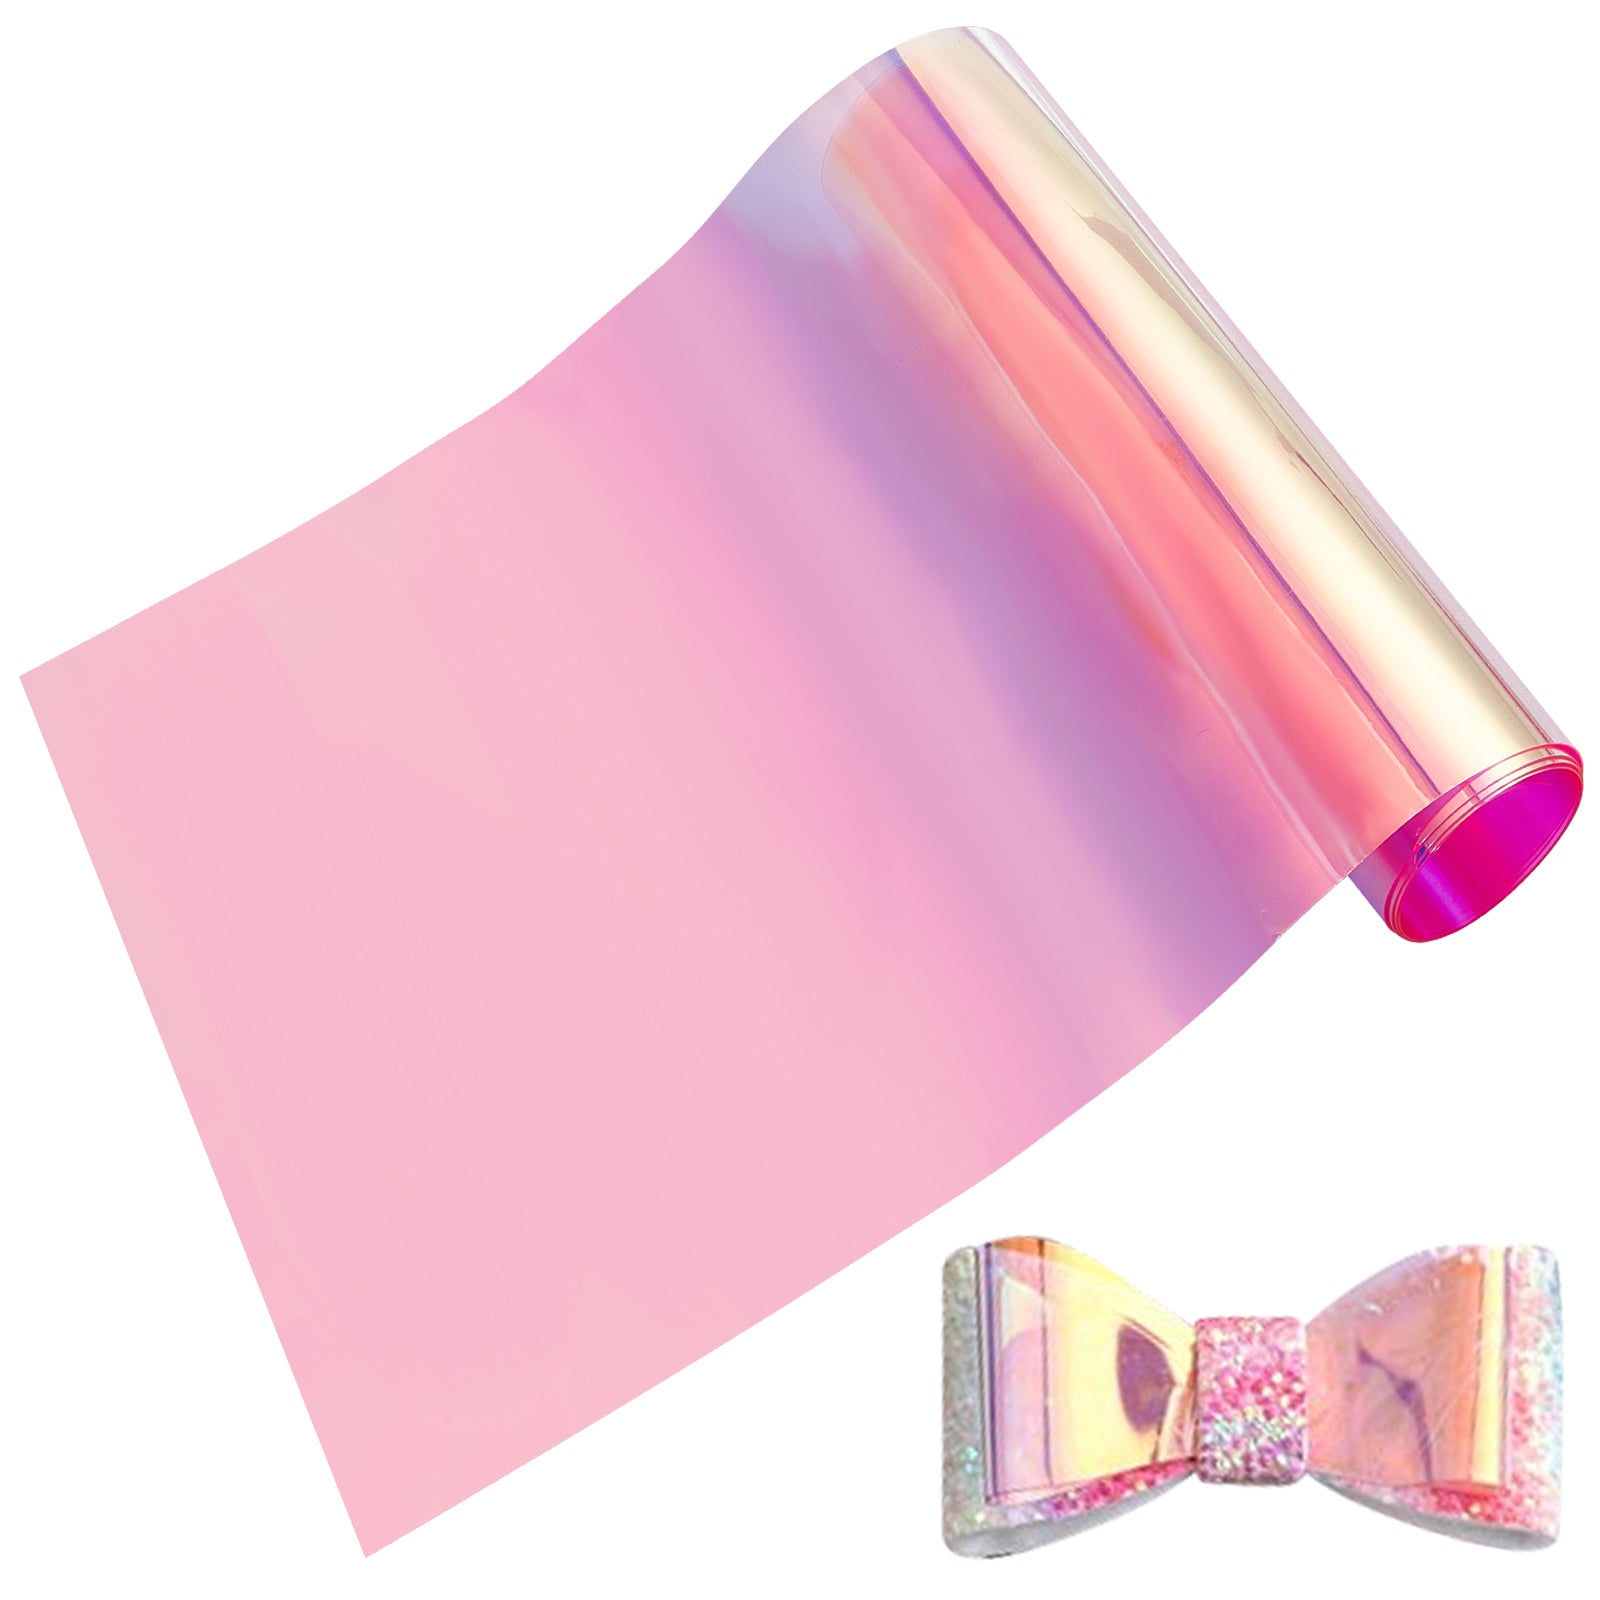 Globleland Rainbow PVC Vinyl Laser Film Paper, with Dazzling Magic Mirror Effect, for Decorate Wedding Handmade Props, Pink, 95x20.4x0.04cm